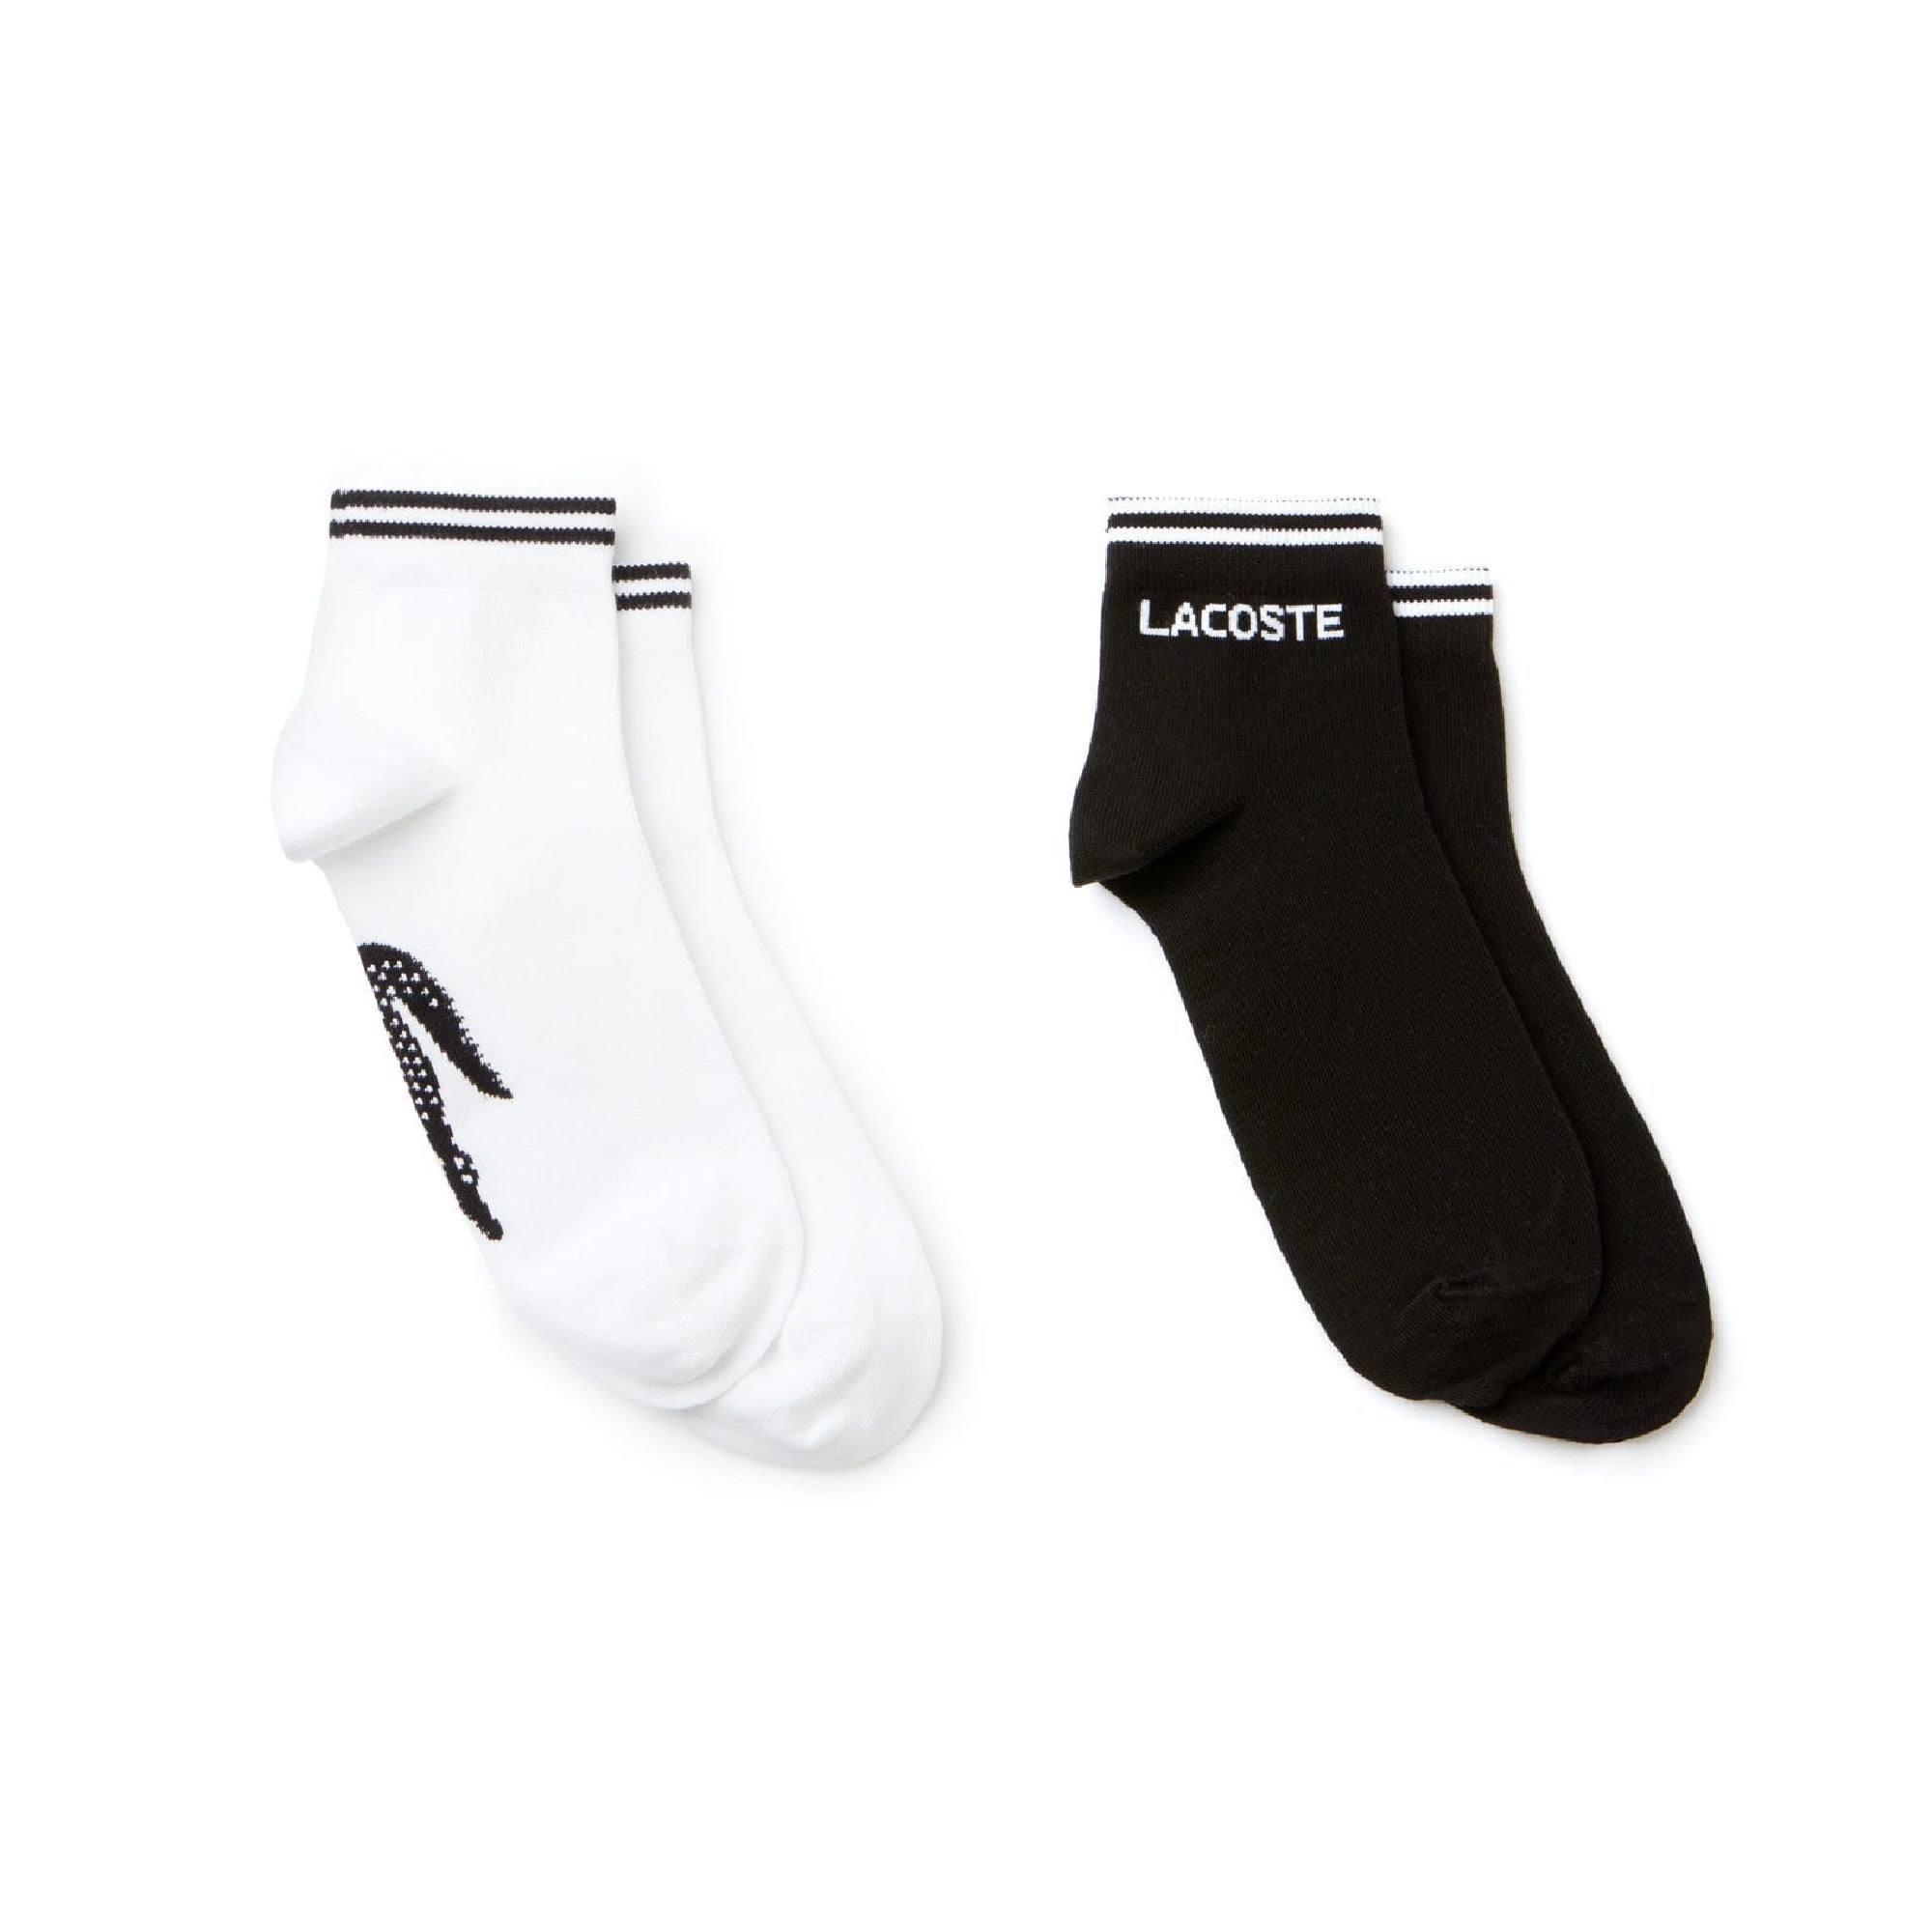 Lacoste 2 Pack Low Cut Socks RA8495 Black White 258 | Function18